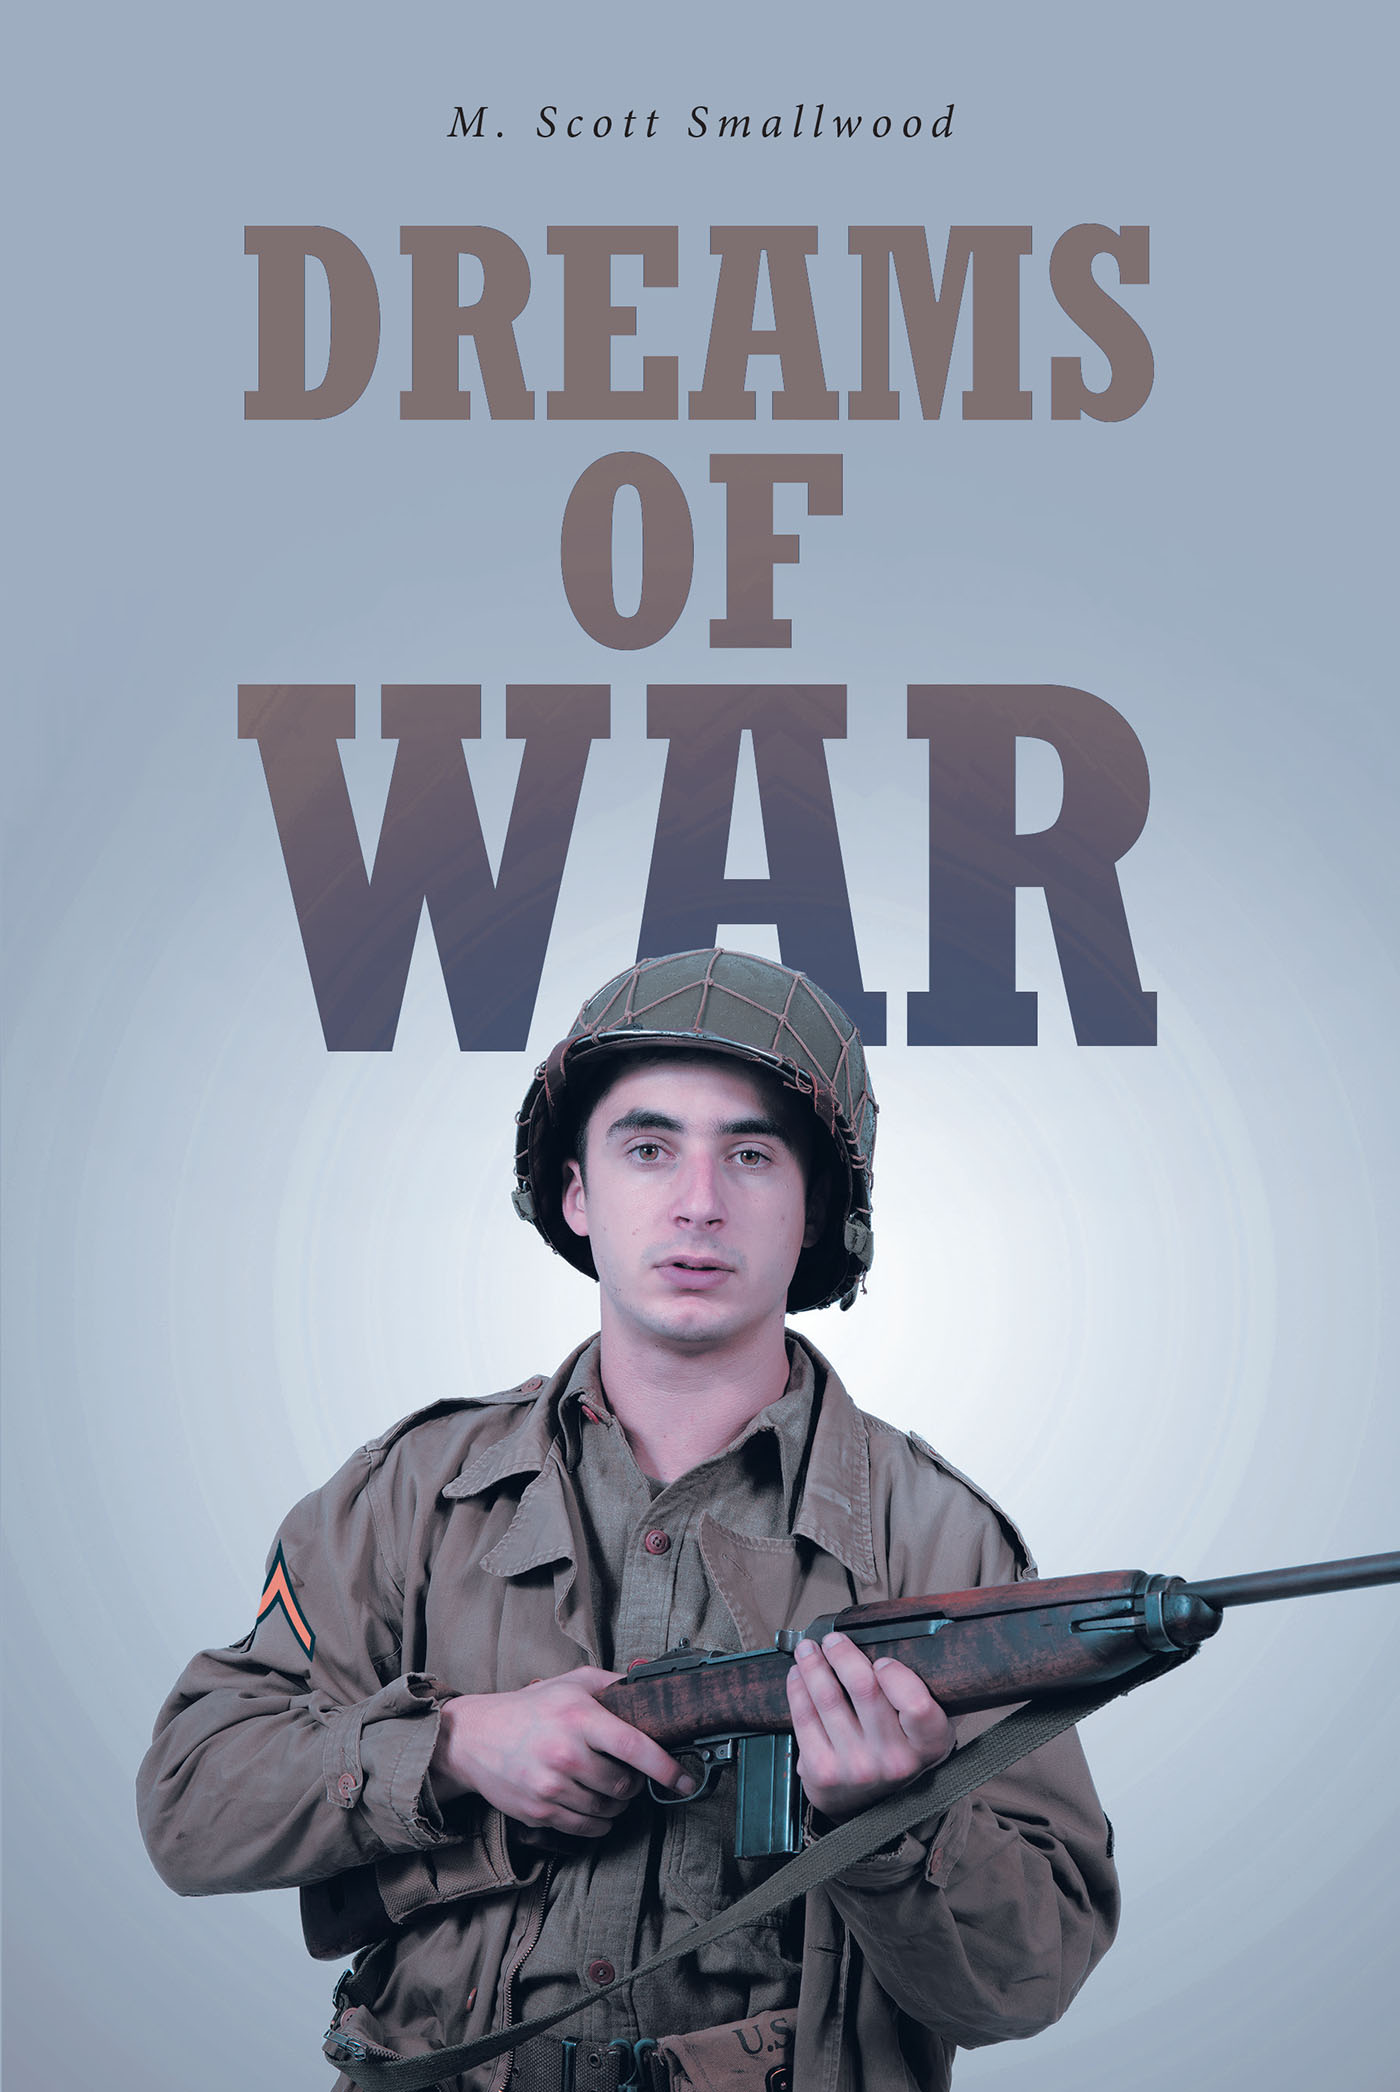 Dreams of War Cover Image